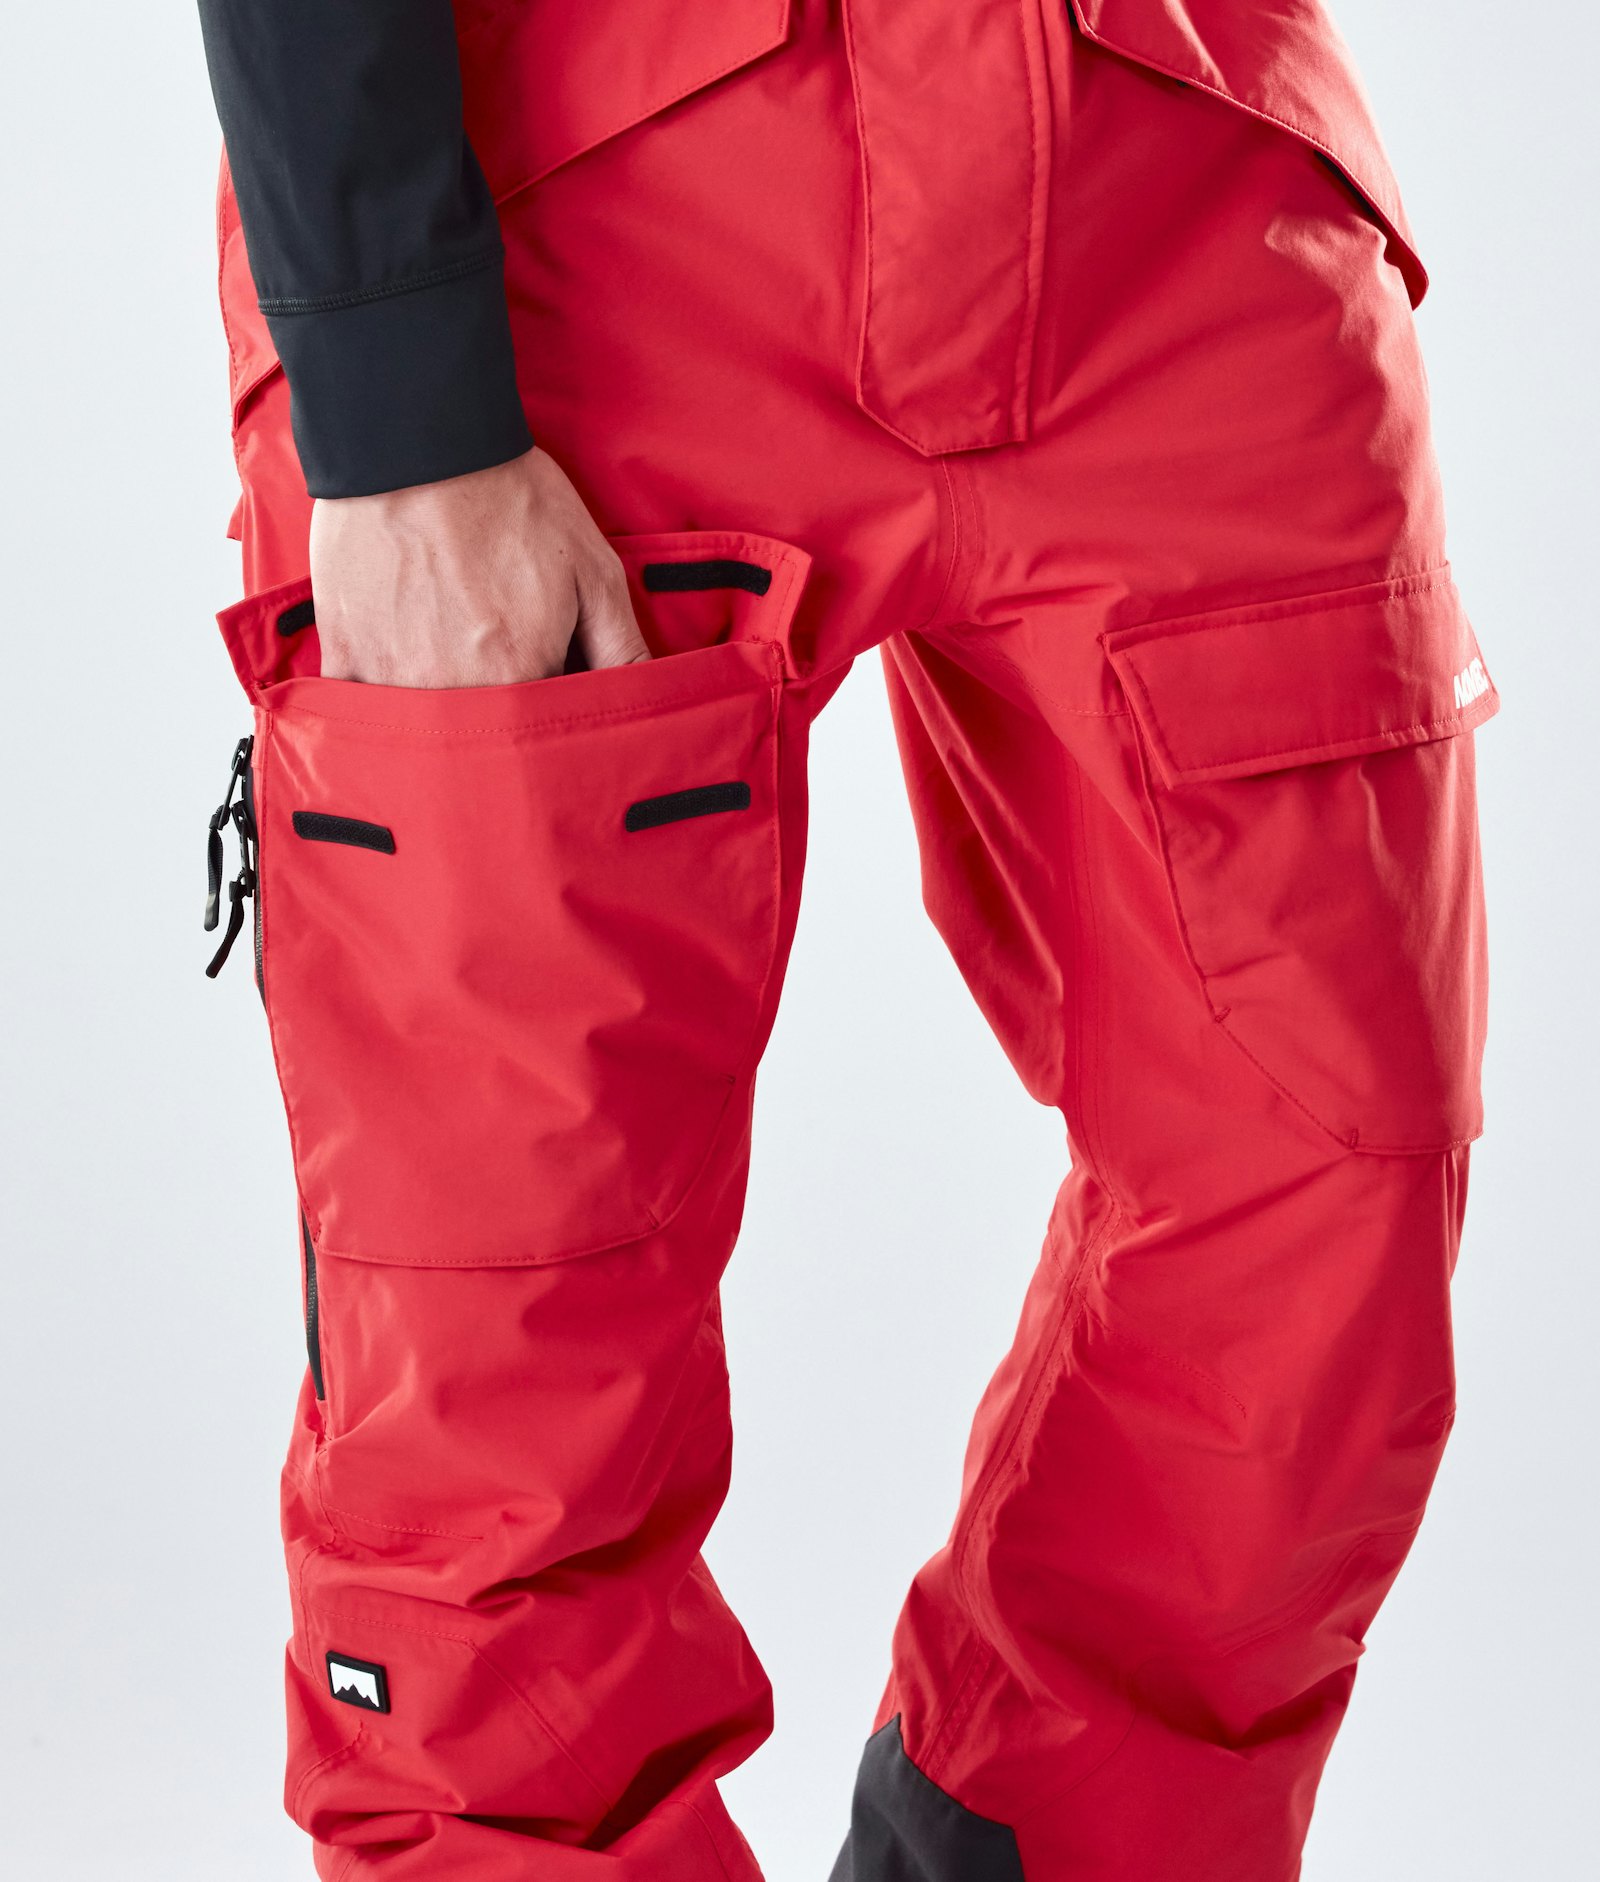 Fawk 2020 Snowboard Pants Men Red